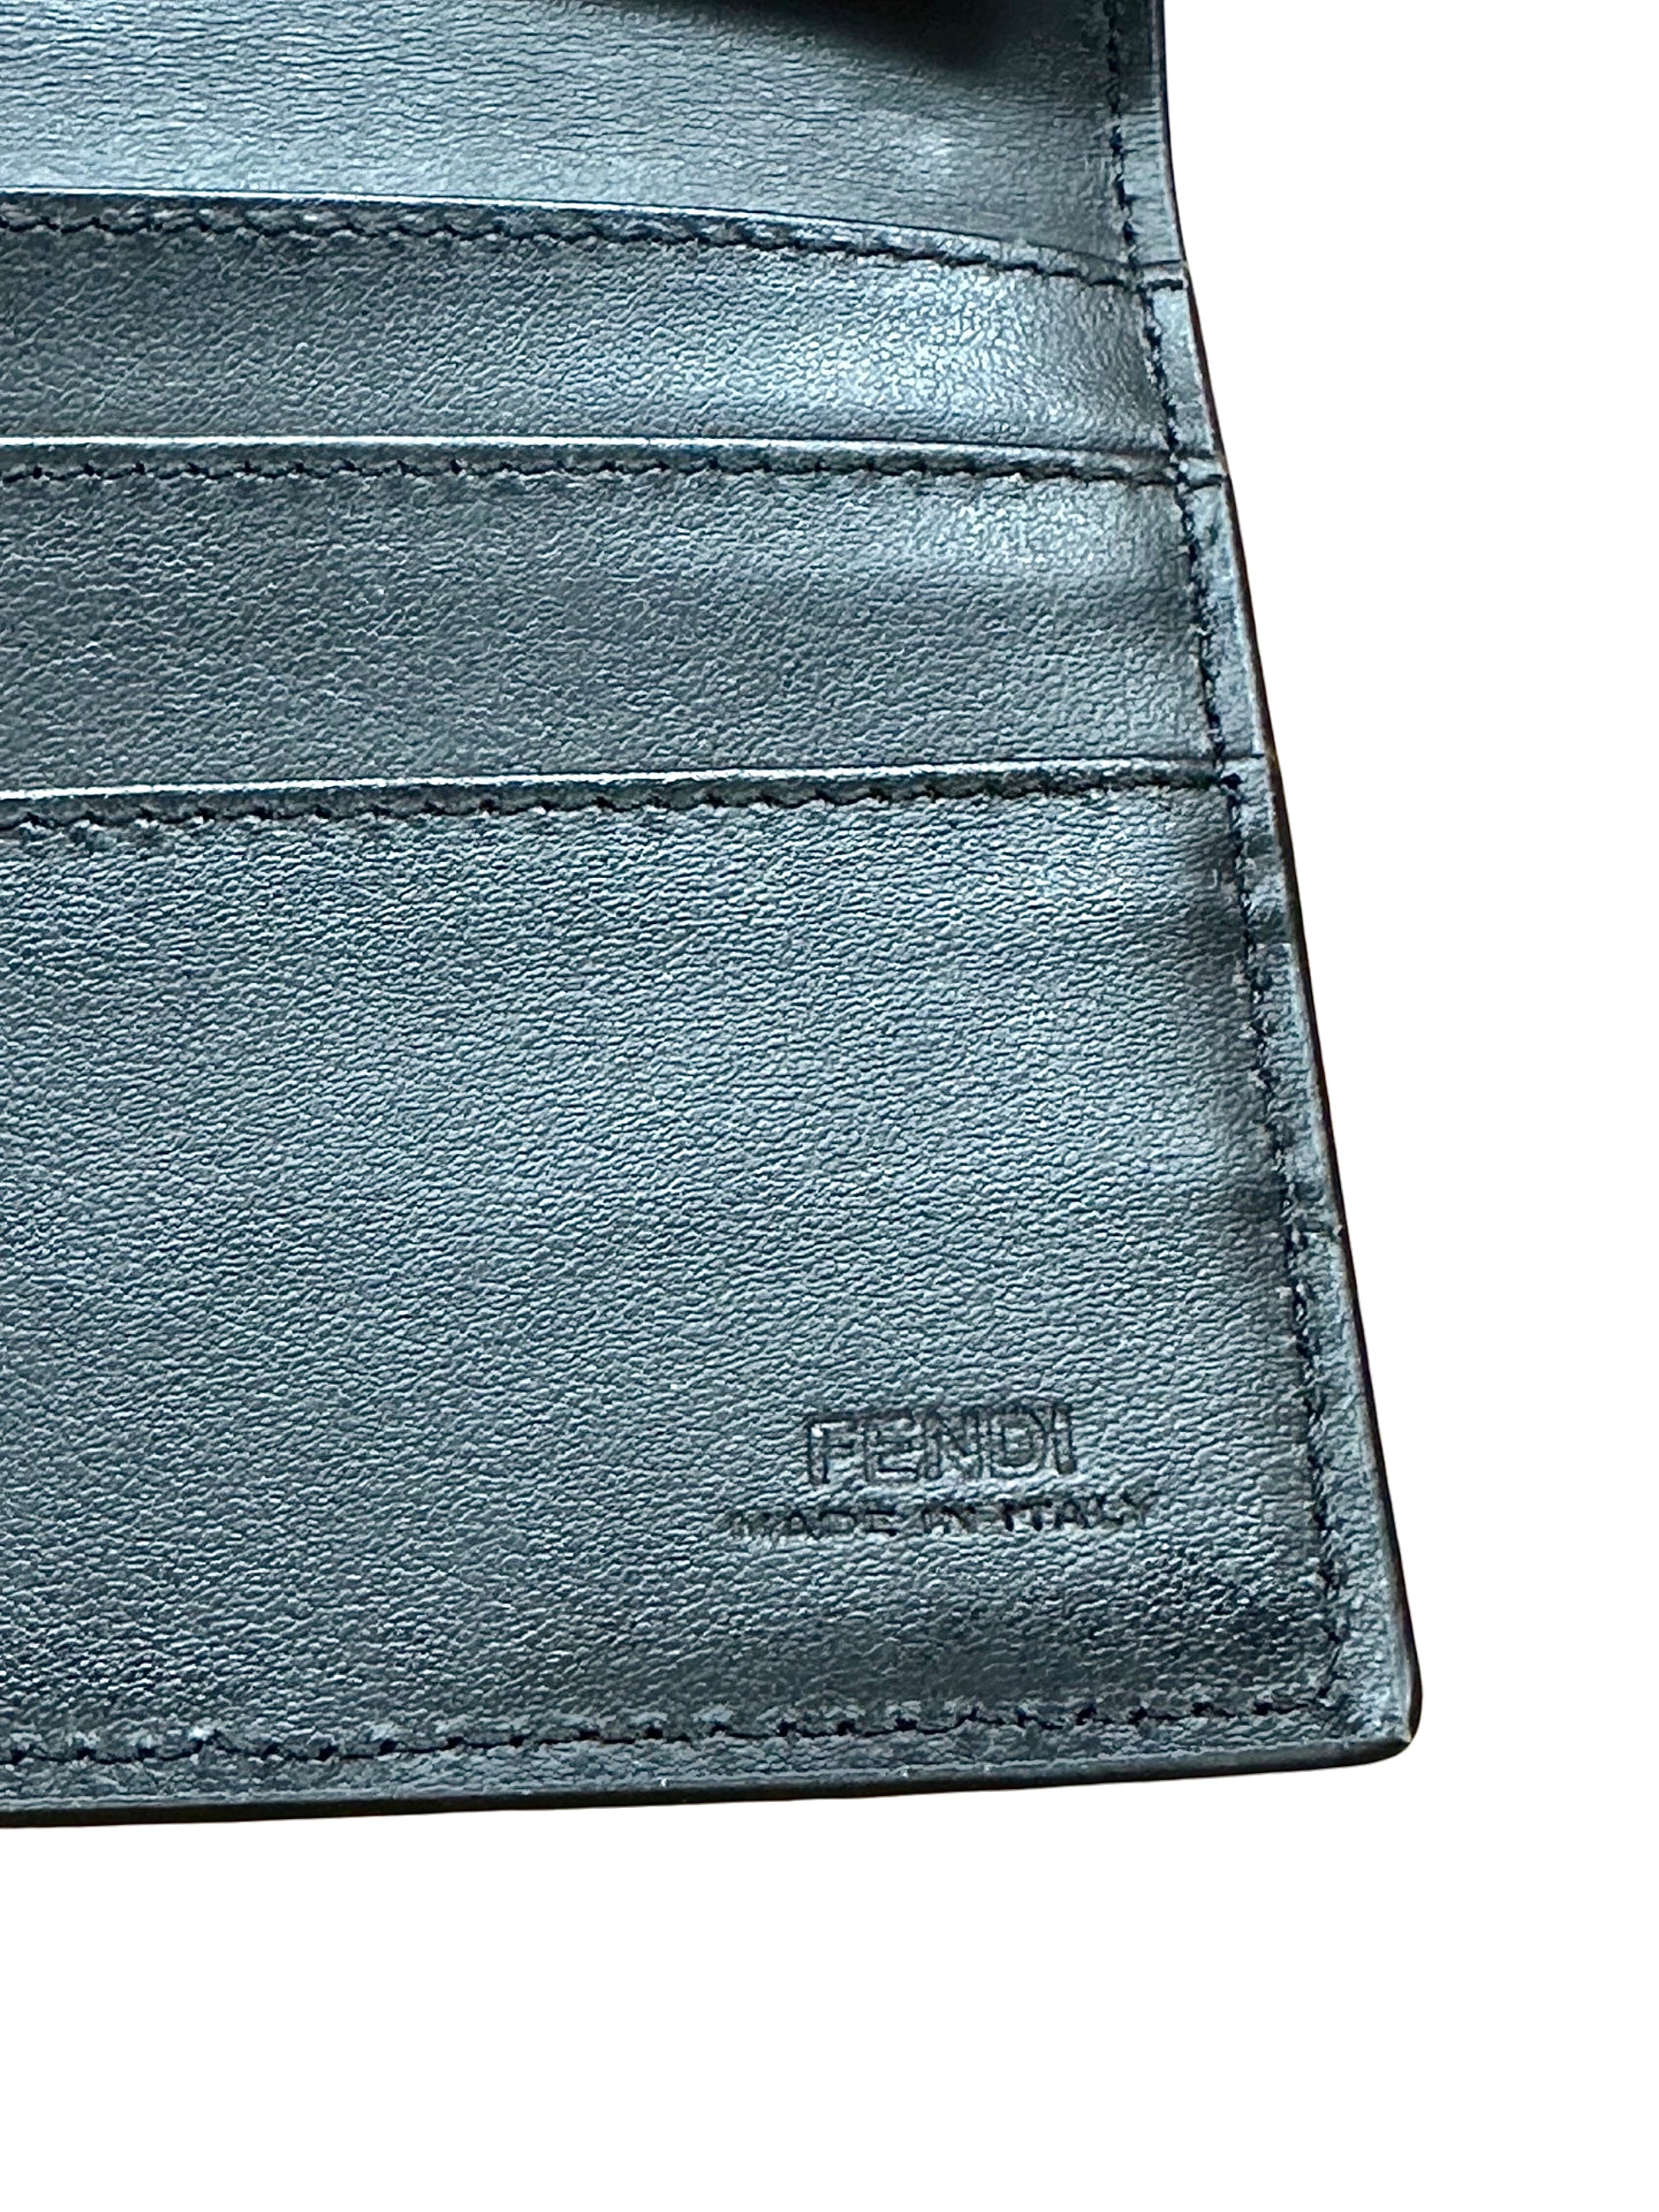 Fendi leather logo on bottom corner of wallet